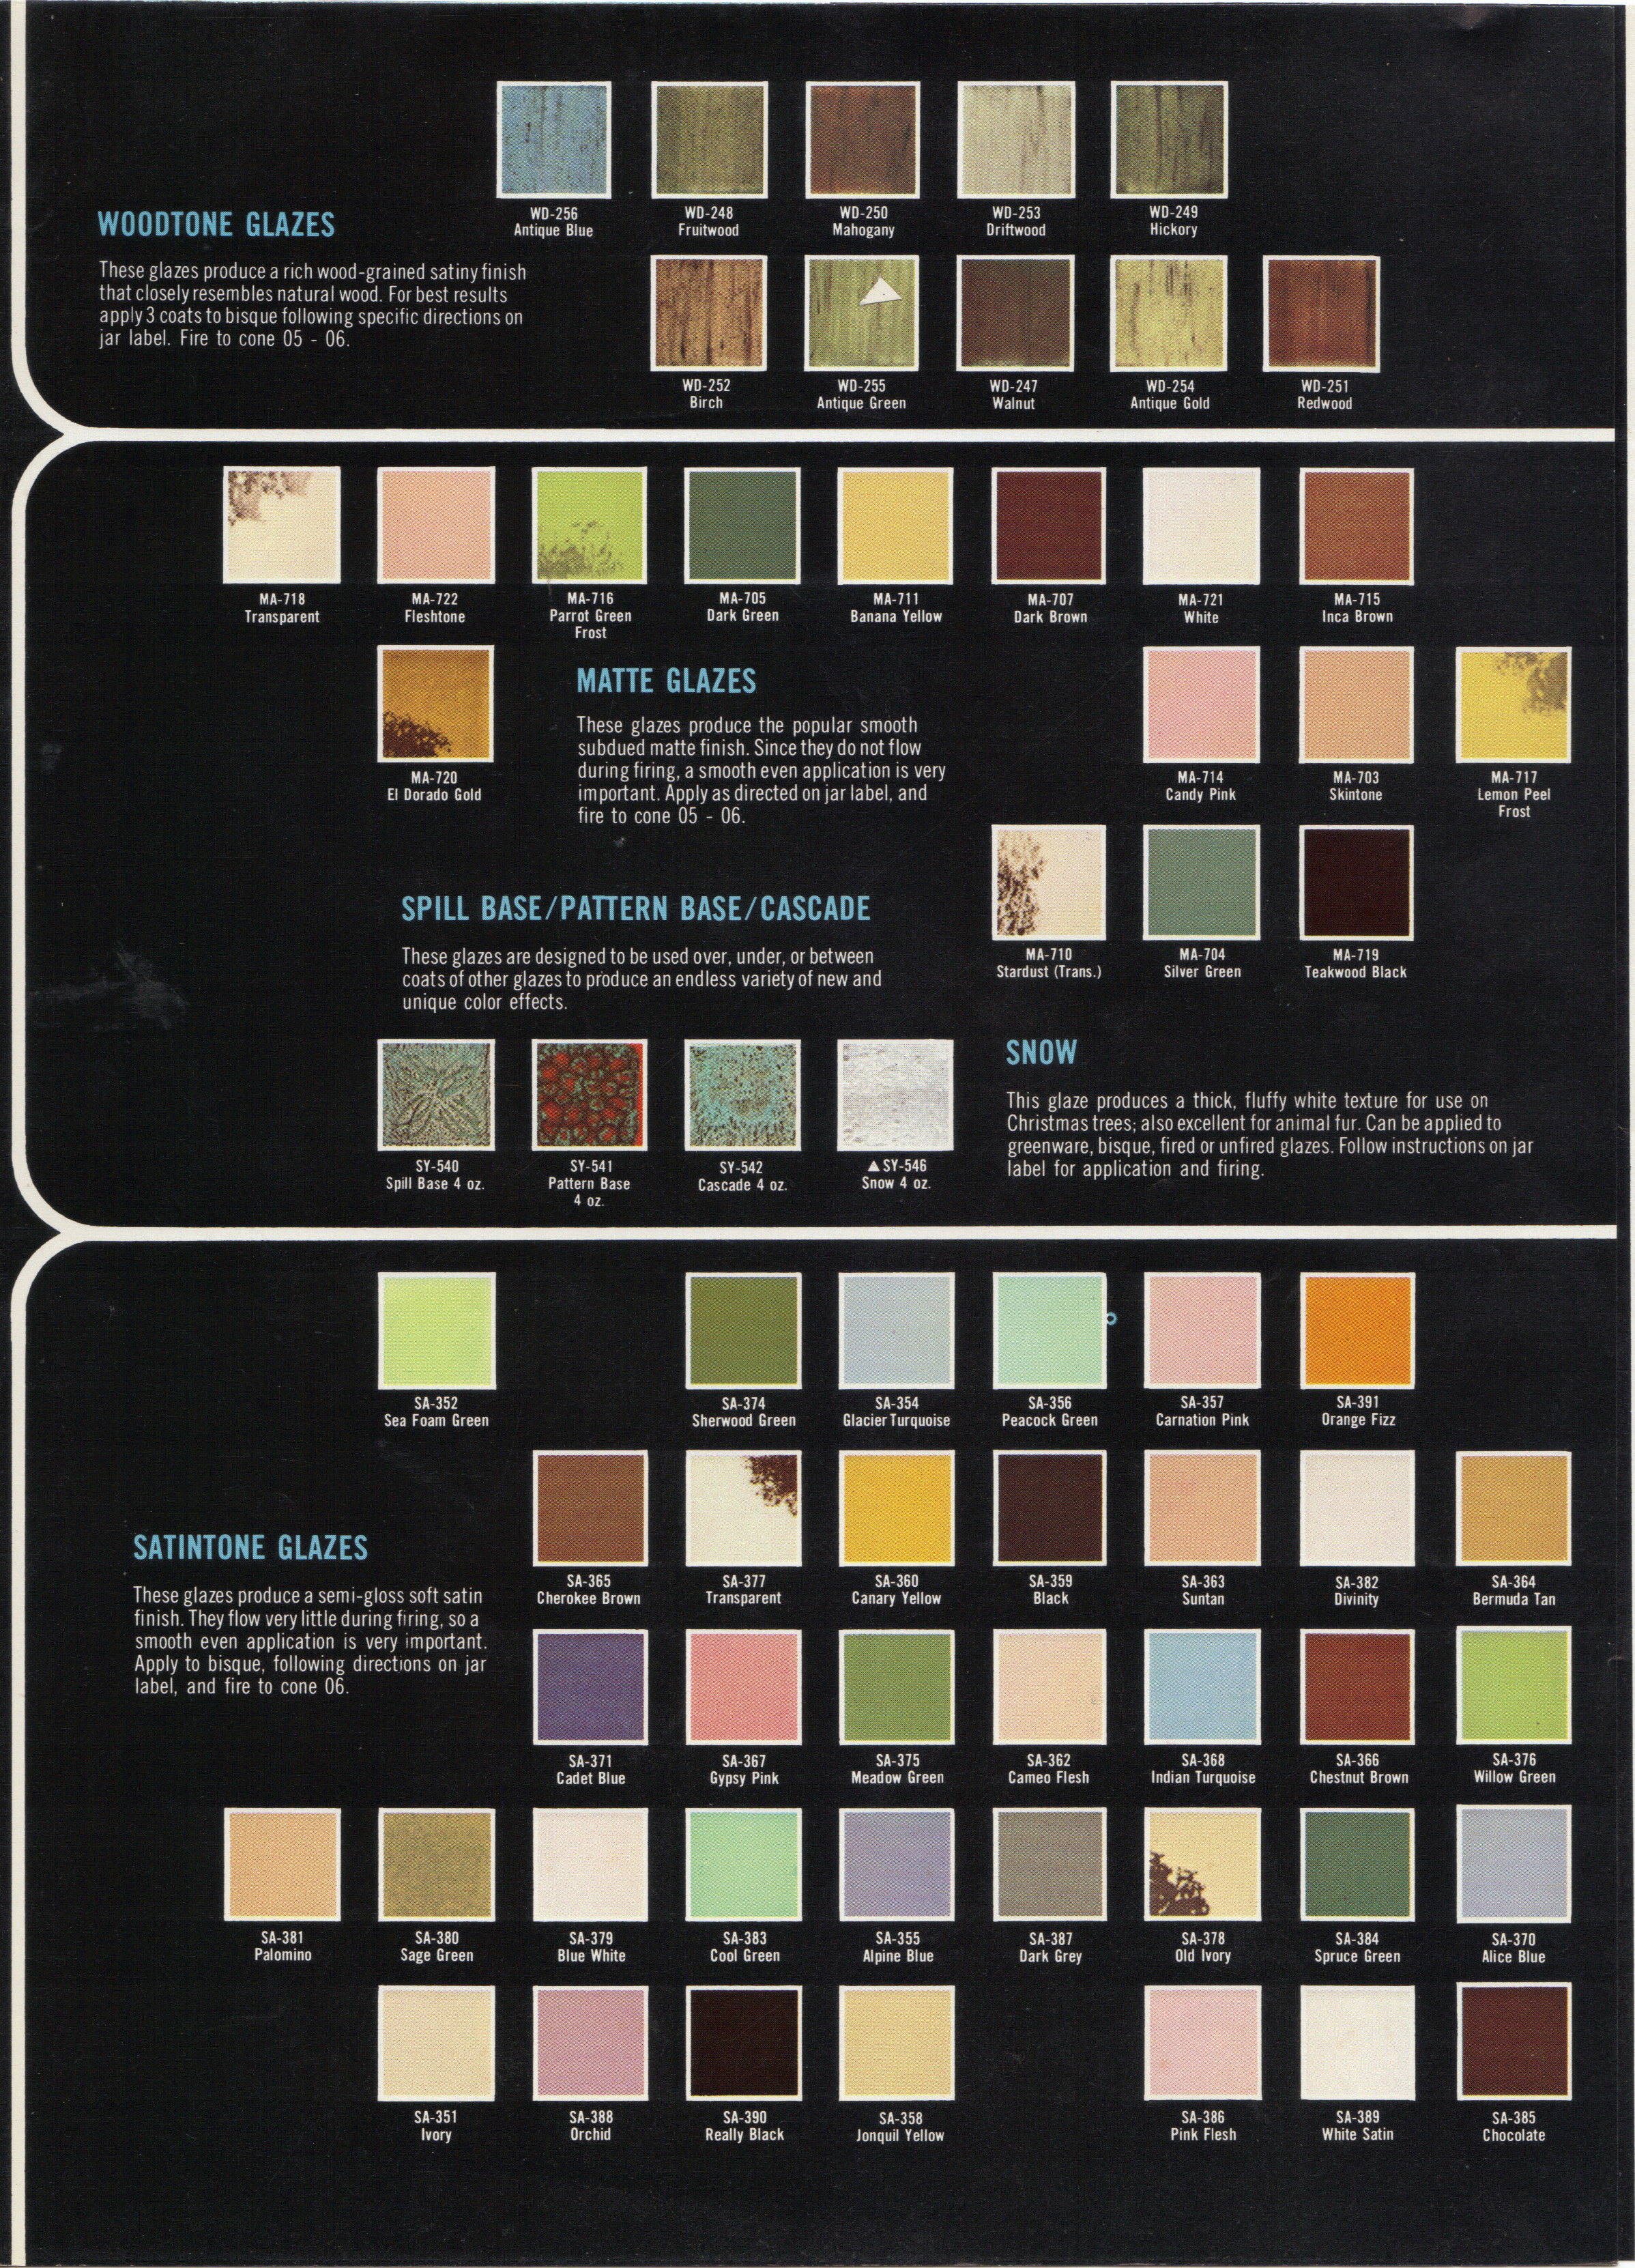 Duncan Color Chart